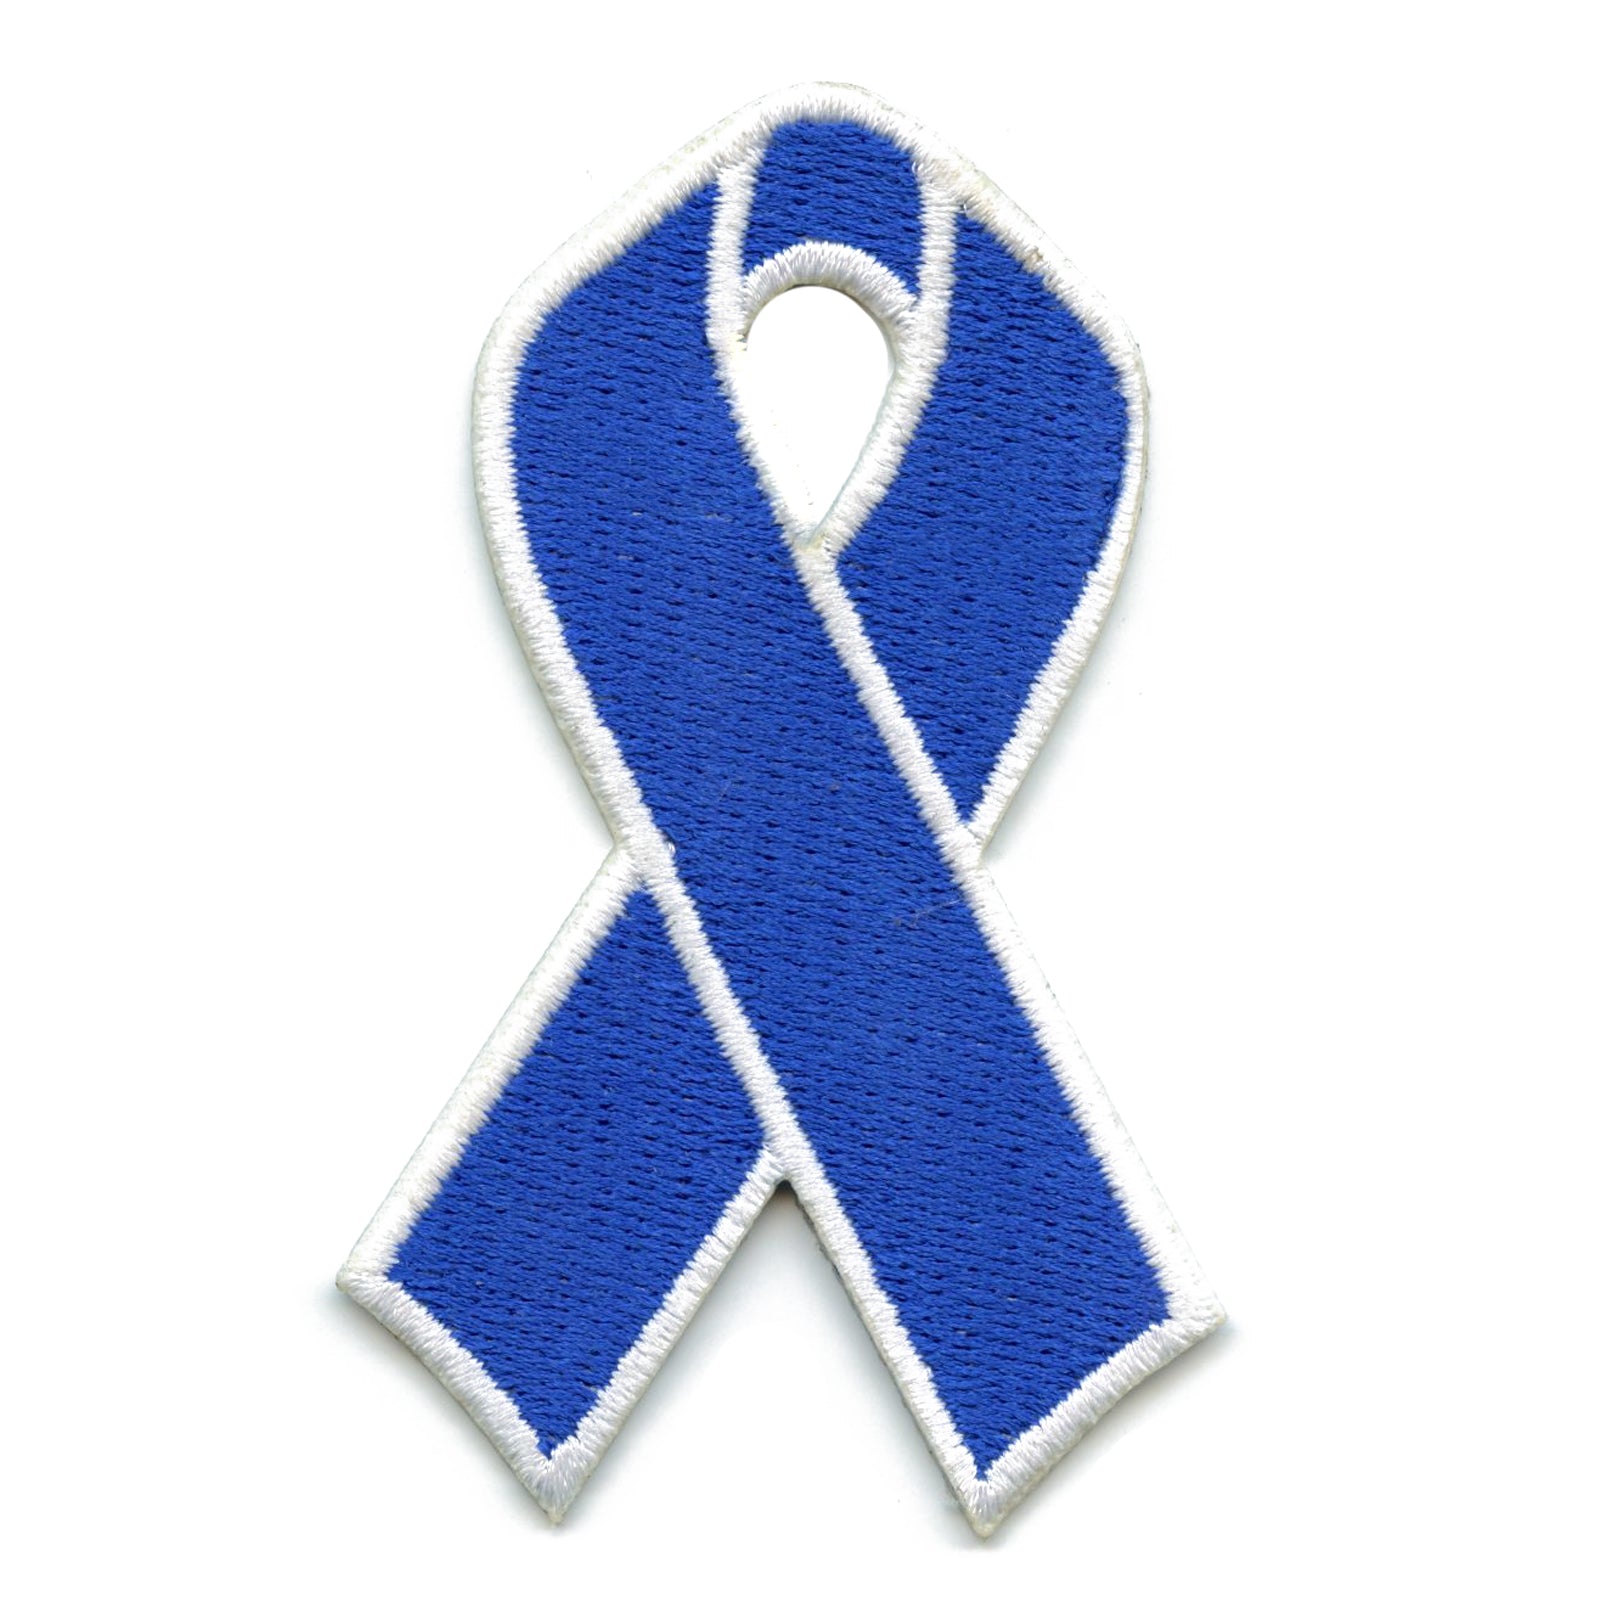 Dark blue ribbon awareness. Symbolic concept of concern awareness